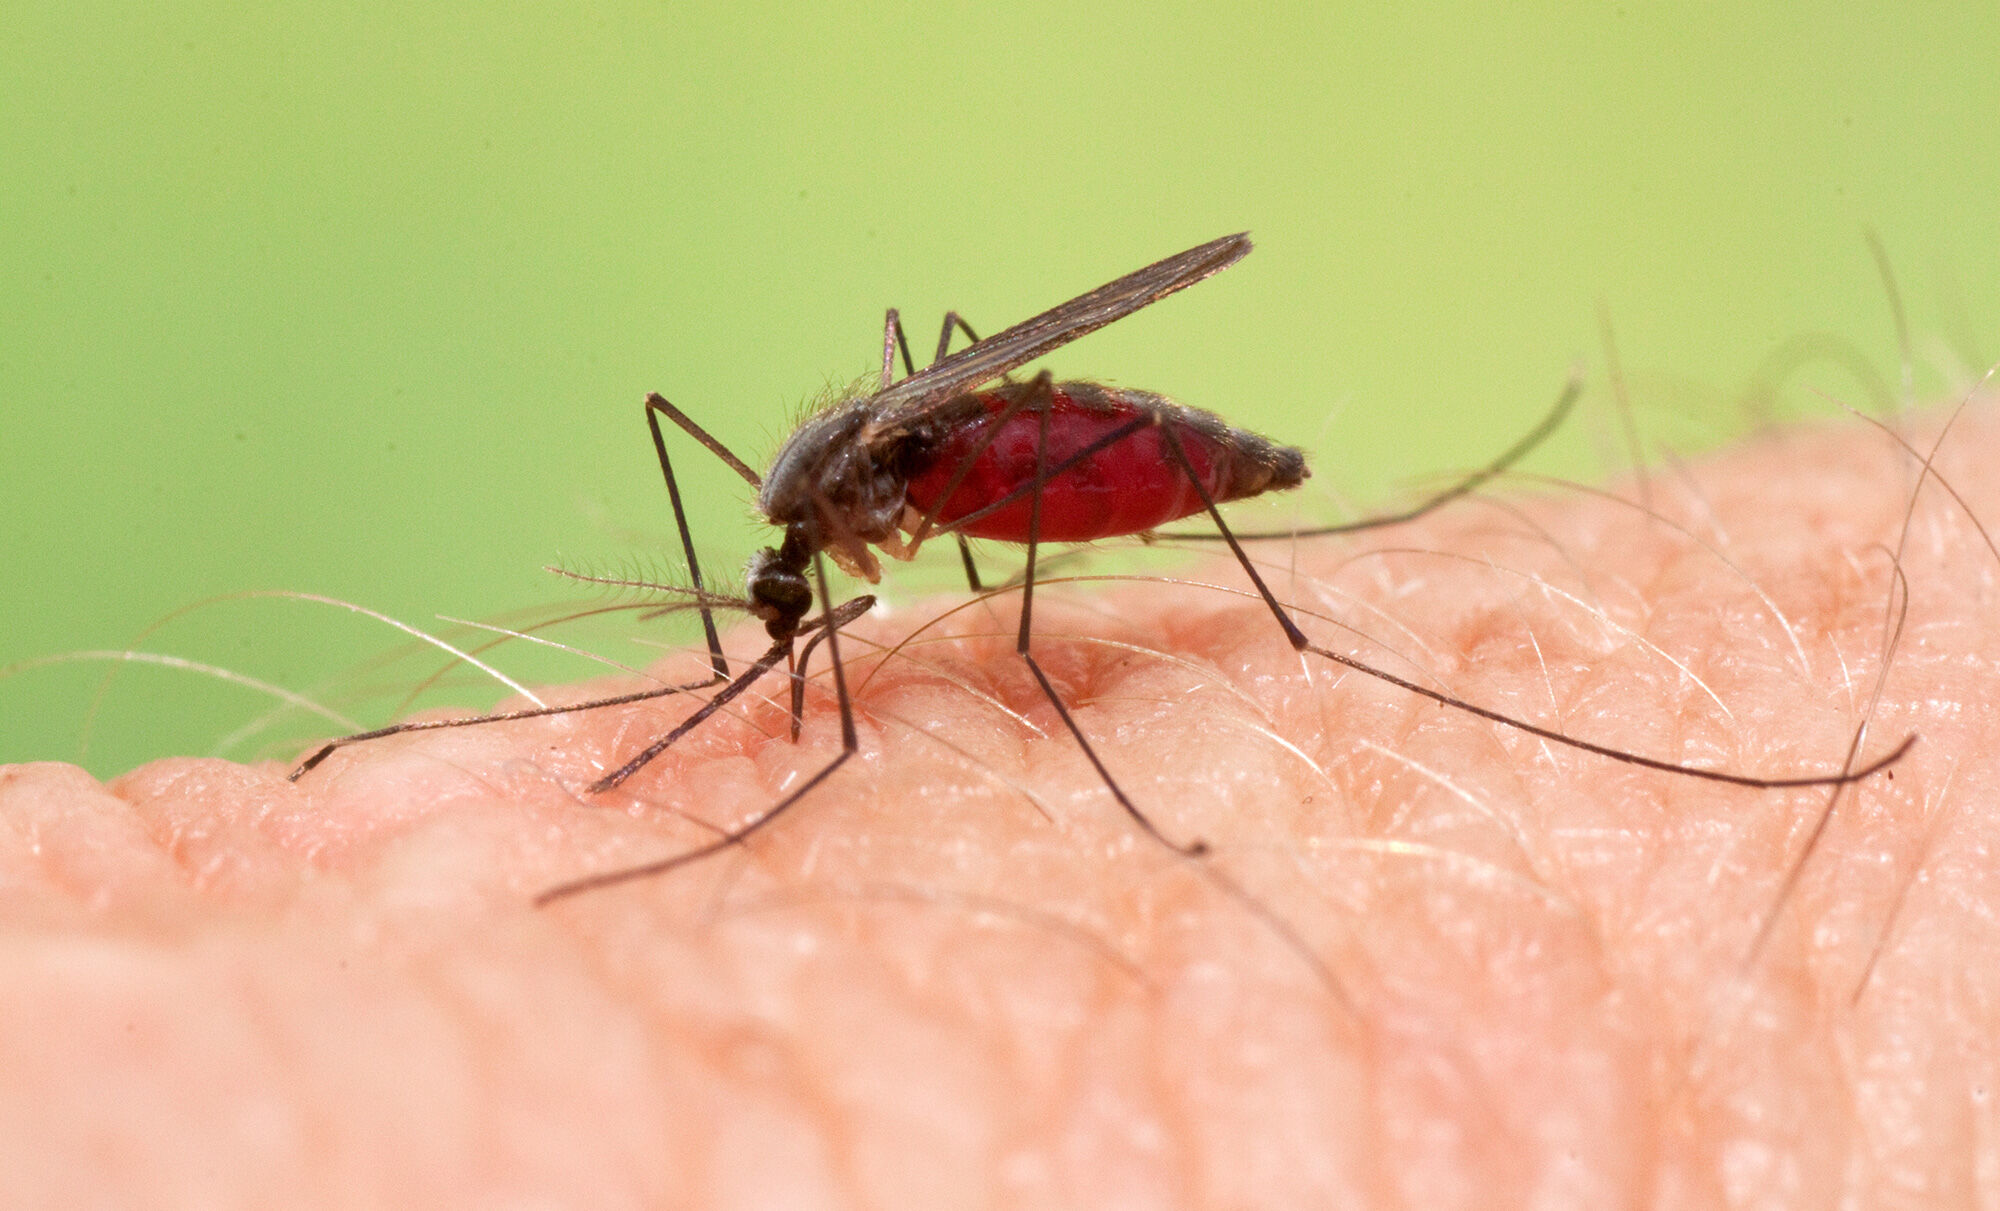 Малярия животное. Малярийный комар анофелес. Малярийный Москит анофелес. Москиты и малярийные комары. Anopheles малярия.